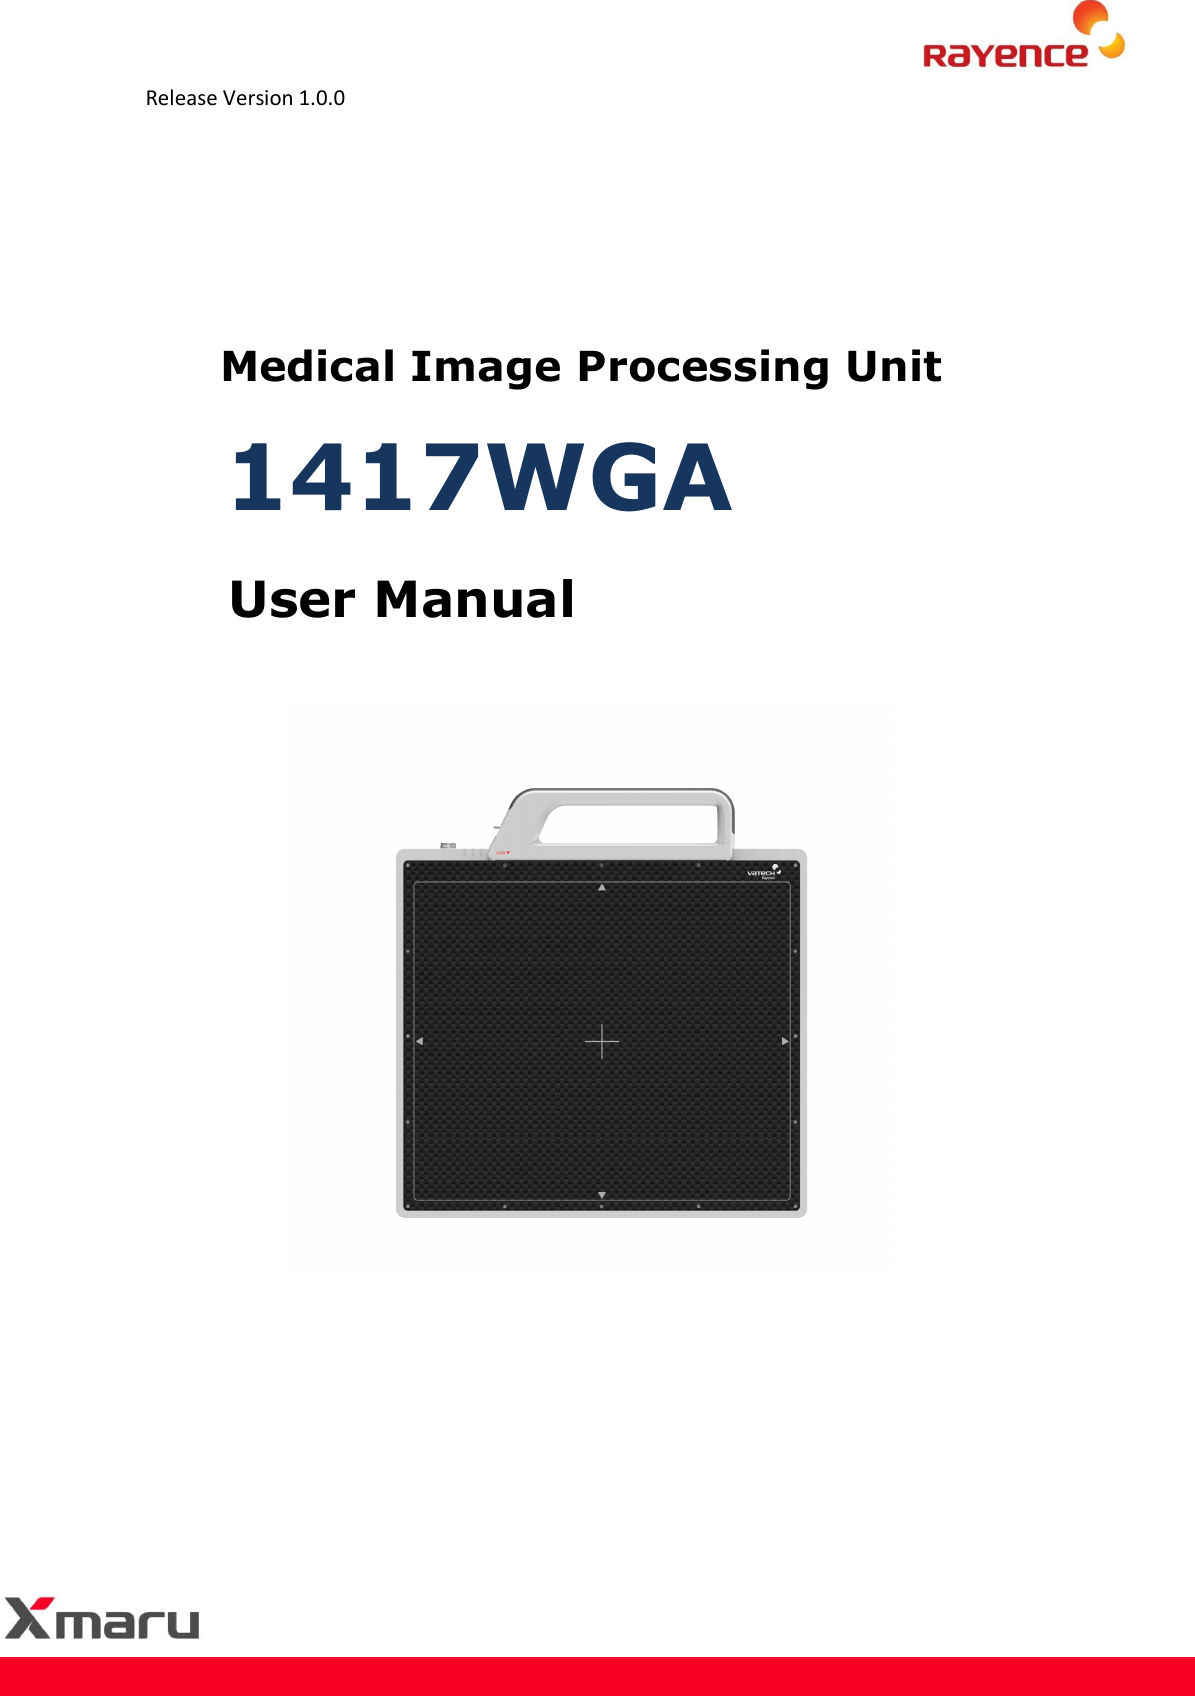        Release Version 1.0.0 Medical Image Processing Unit 1417WGA User Manual 